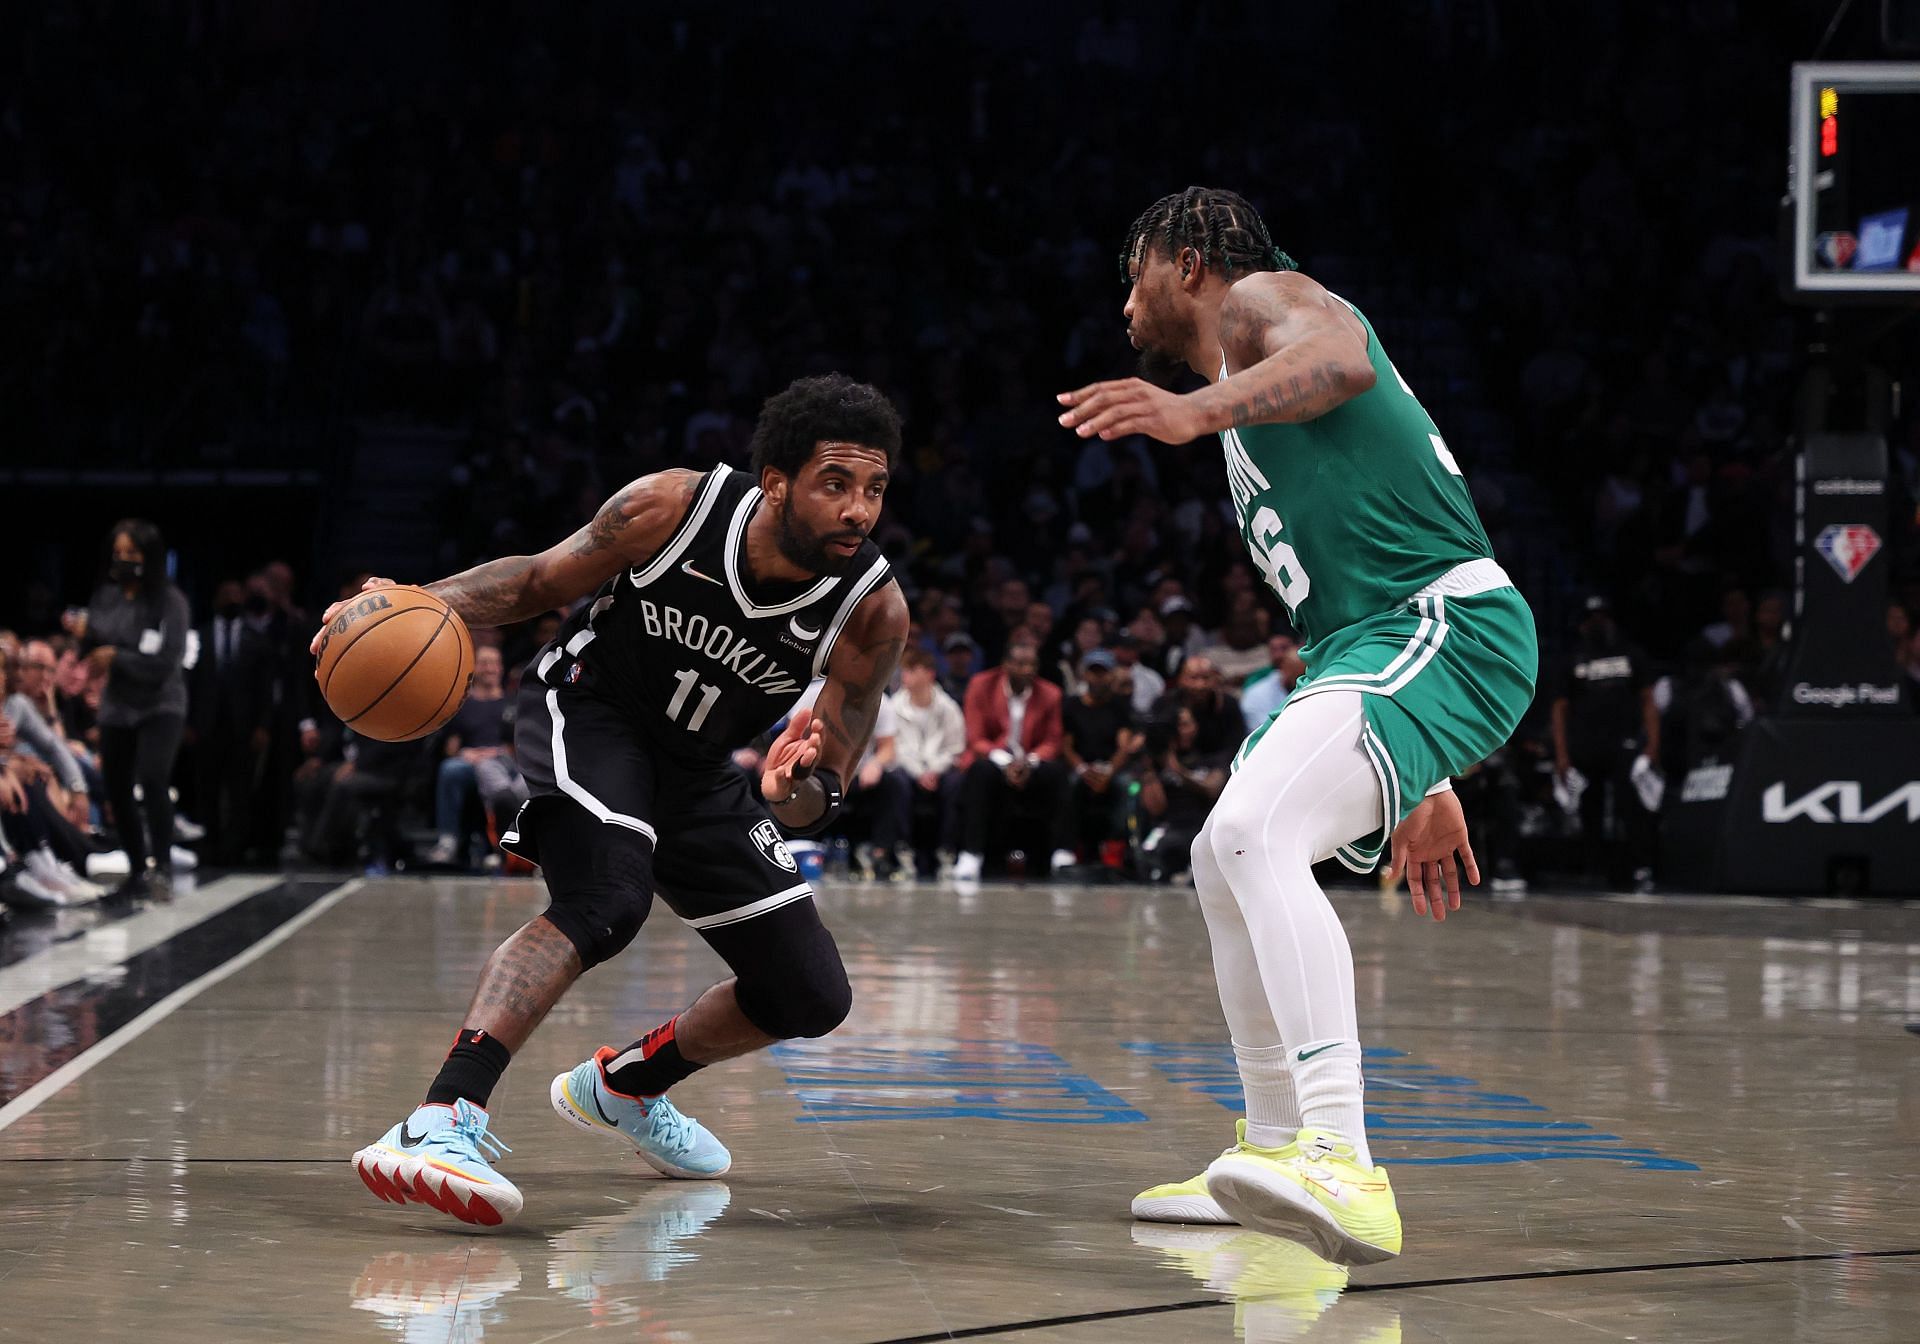 Boston Celtics vs. Brooklyn Nets - Game 3